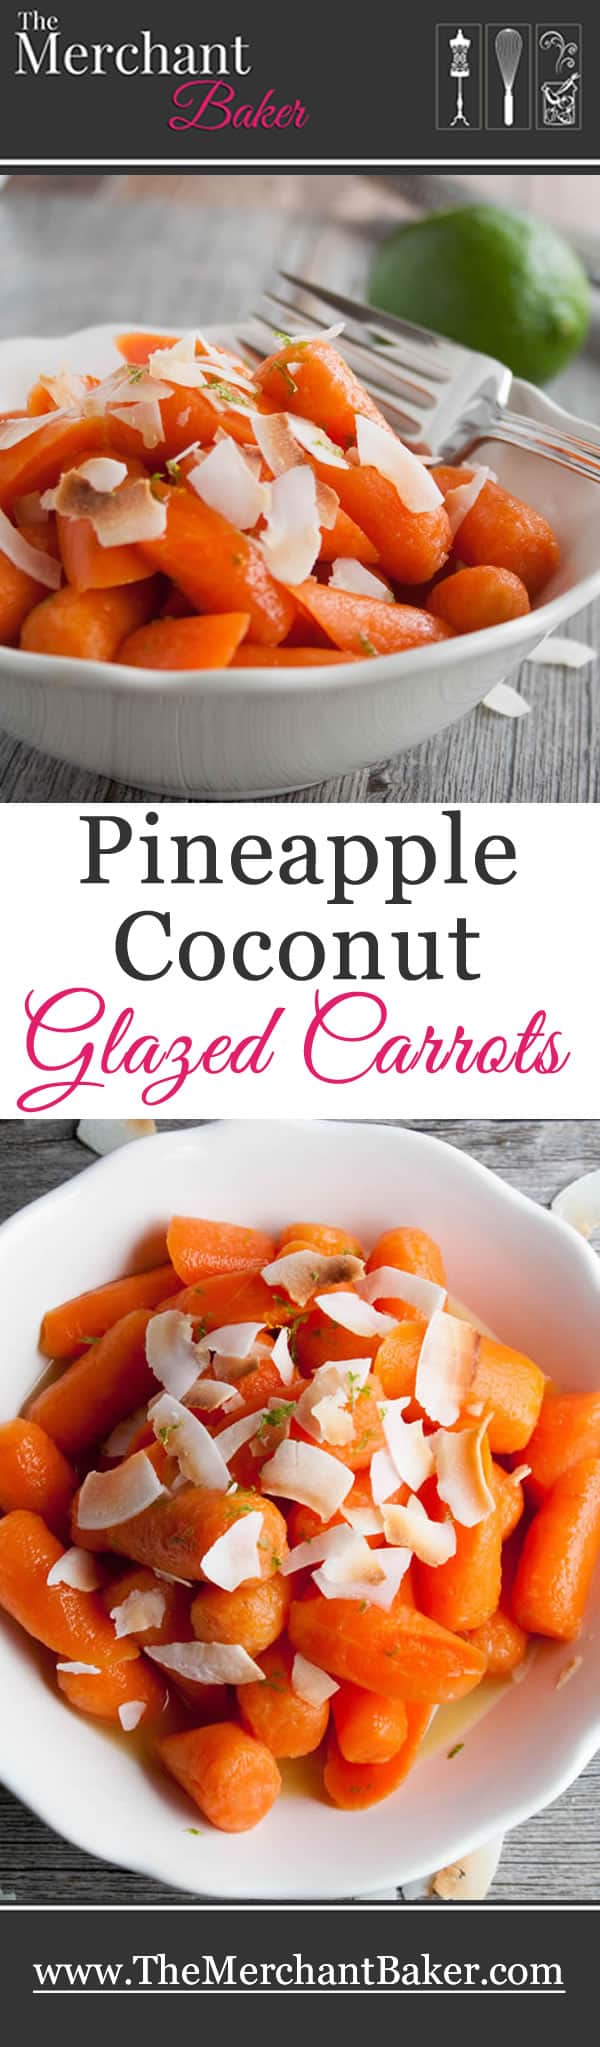 pineapple-coconut-glazed-carrots